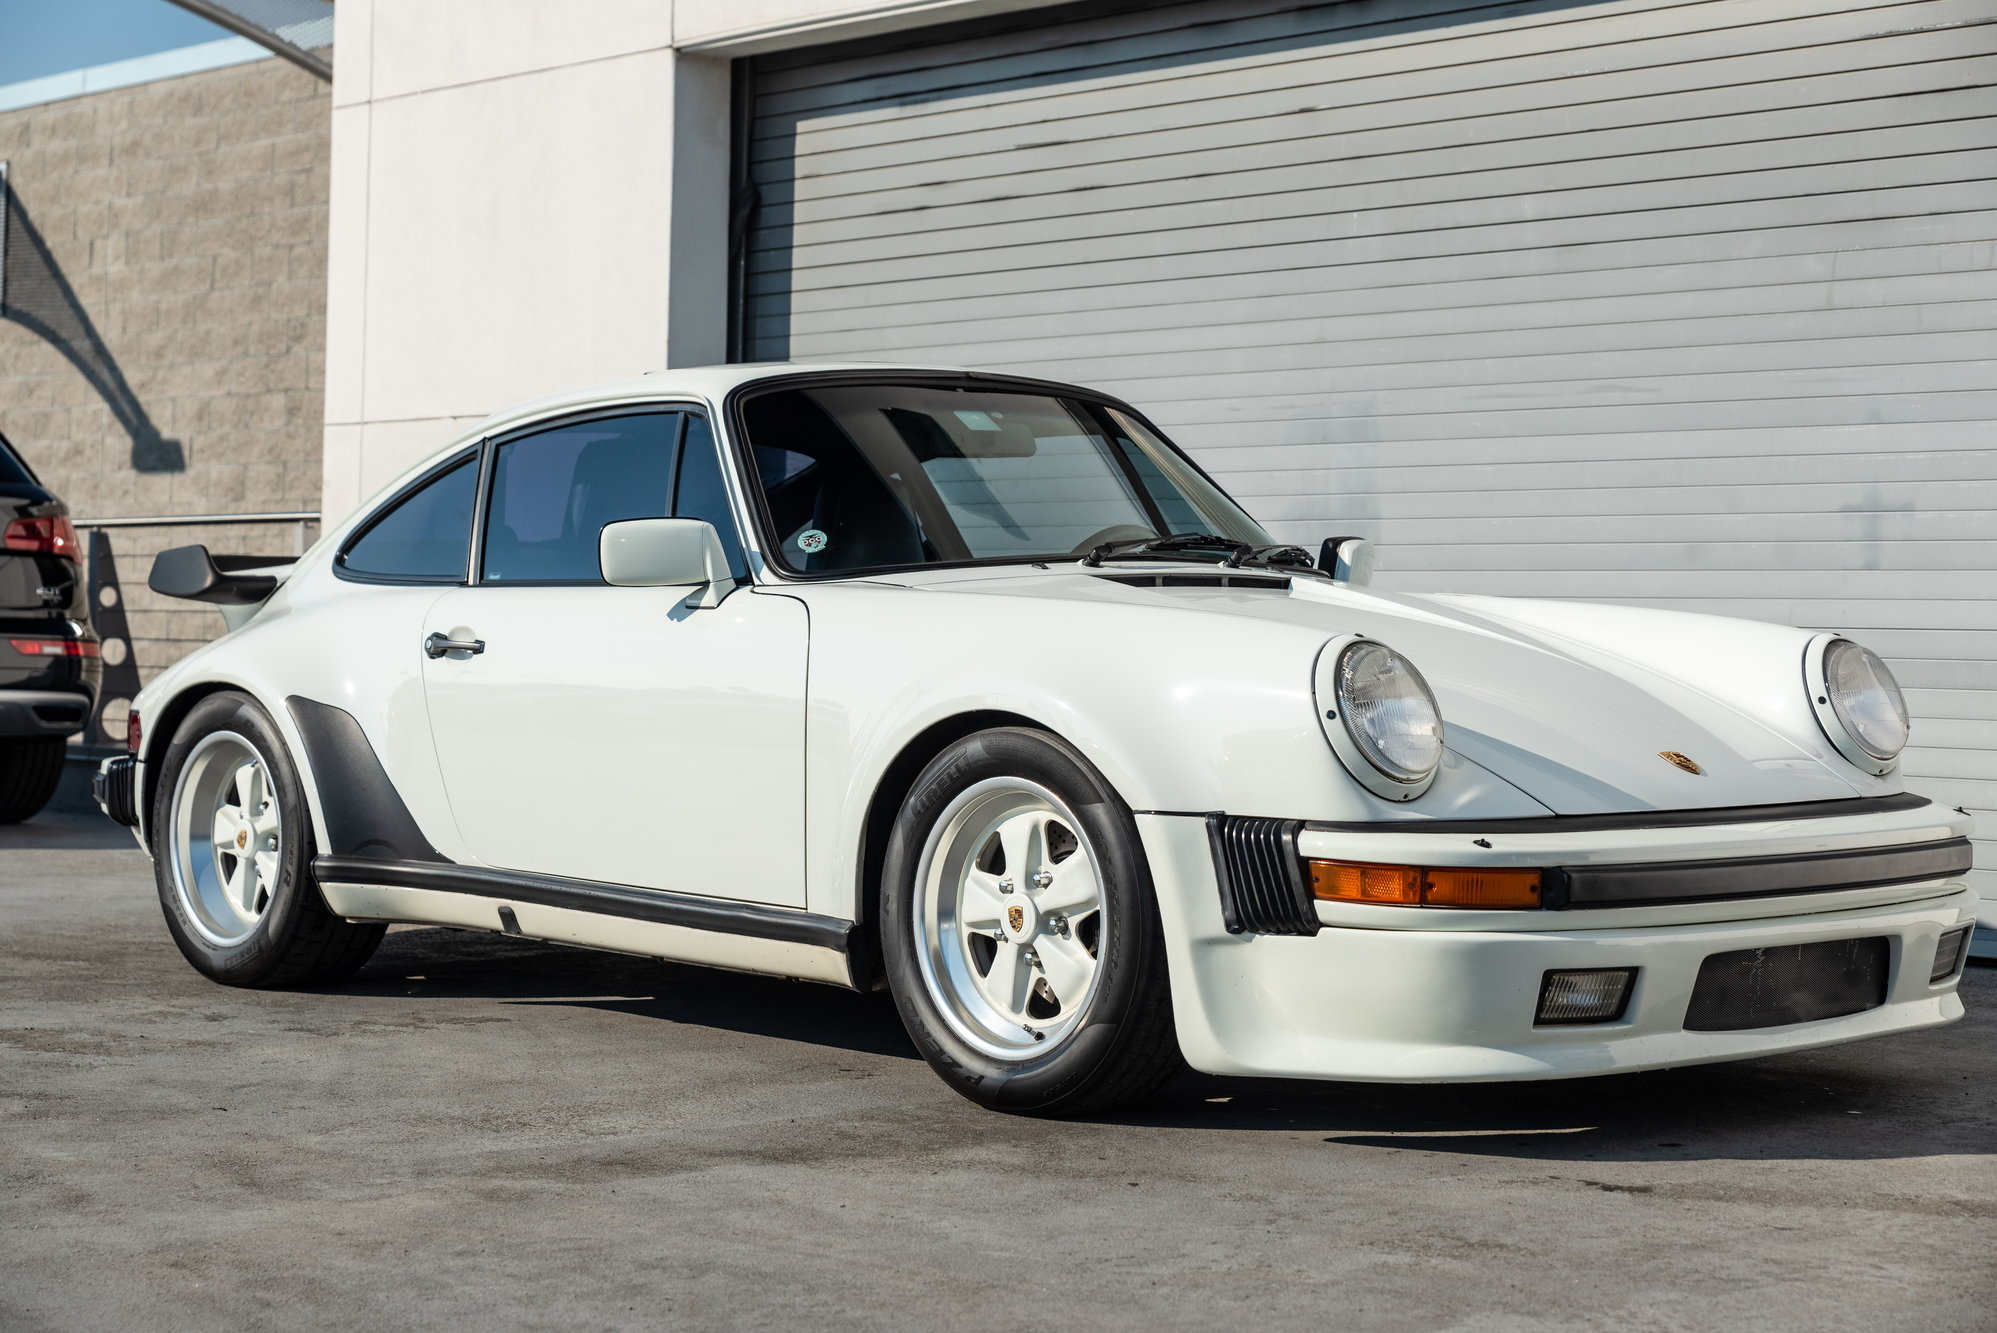 1986 Porsche 911 - Grand Prix White 930 Turbo - Used - VIN WP0JB0939GS051202 - 80,049 Miles - 6 cyl - 2WD - Manual - Coupe - White - Fresno, CA 93650, United States